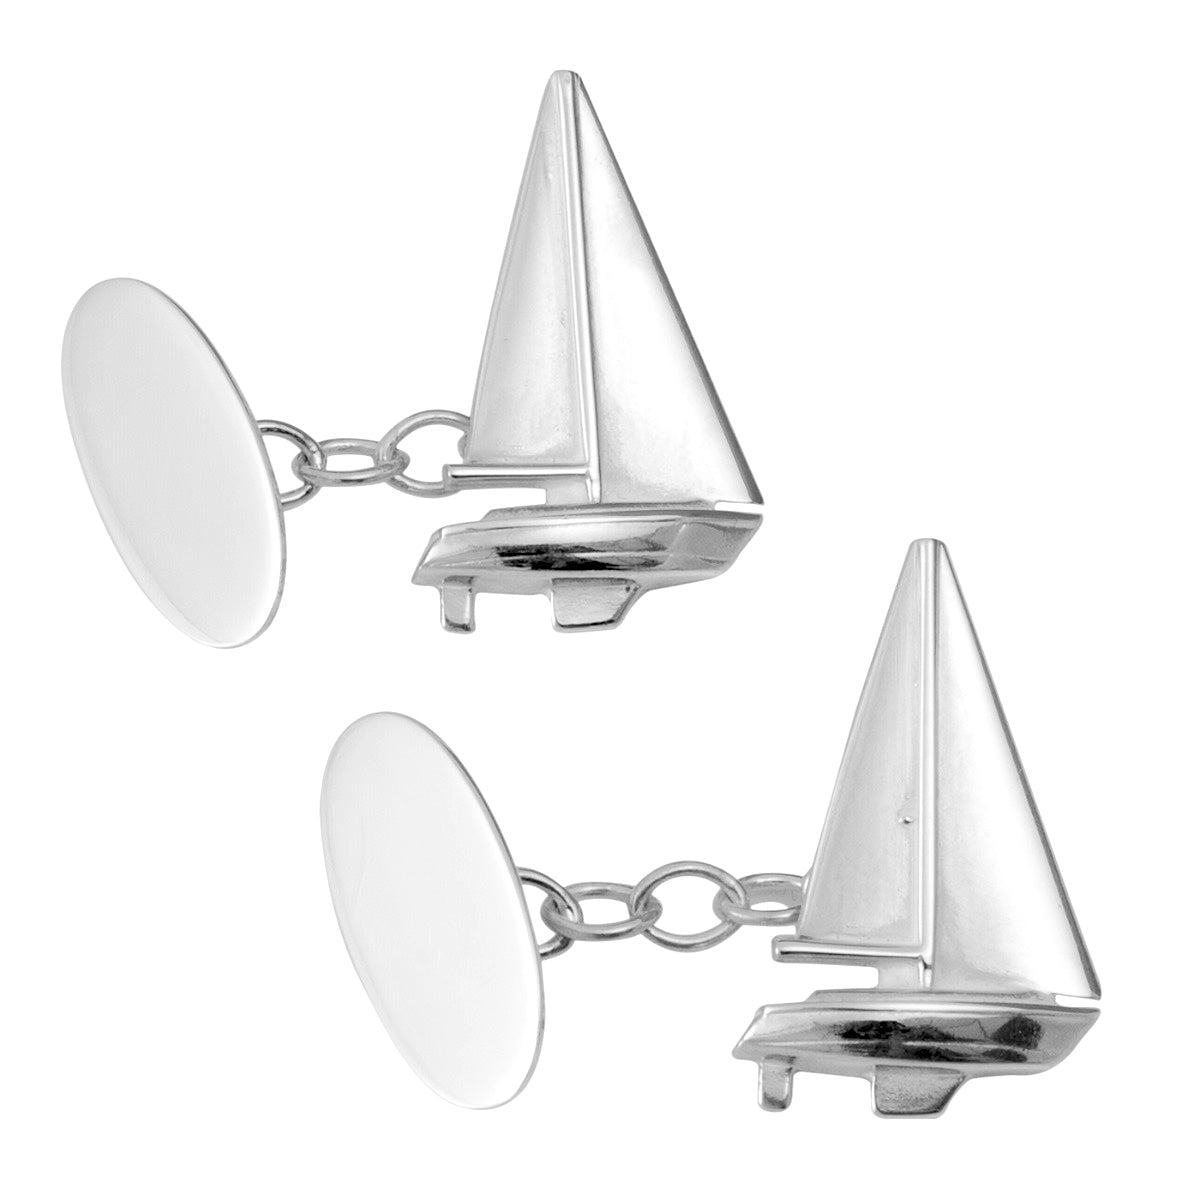 Silver Sailing Boat Cufflinks | Hersey & Son Silversmiths